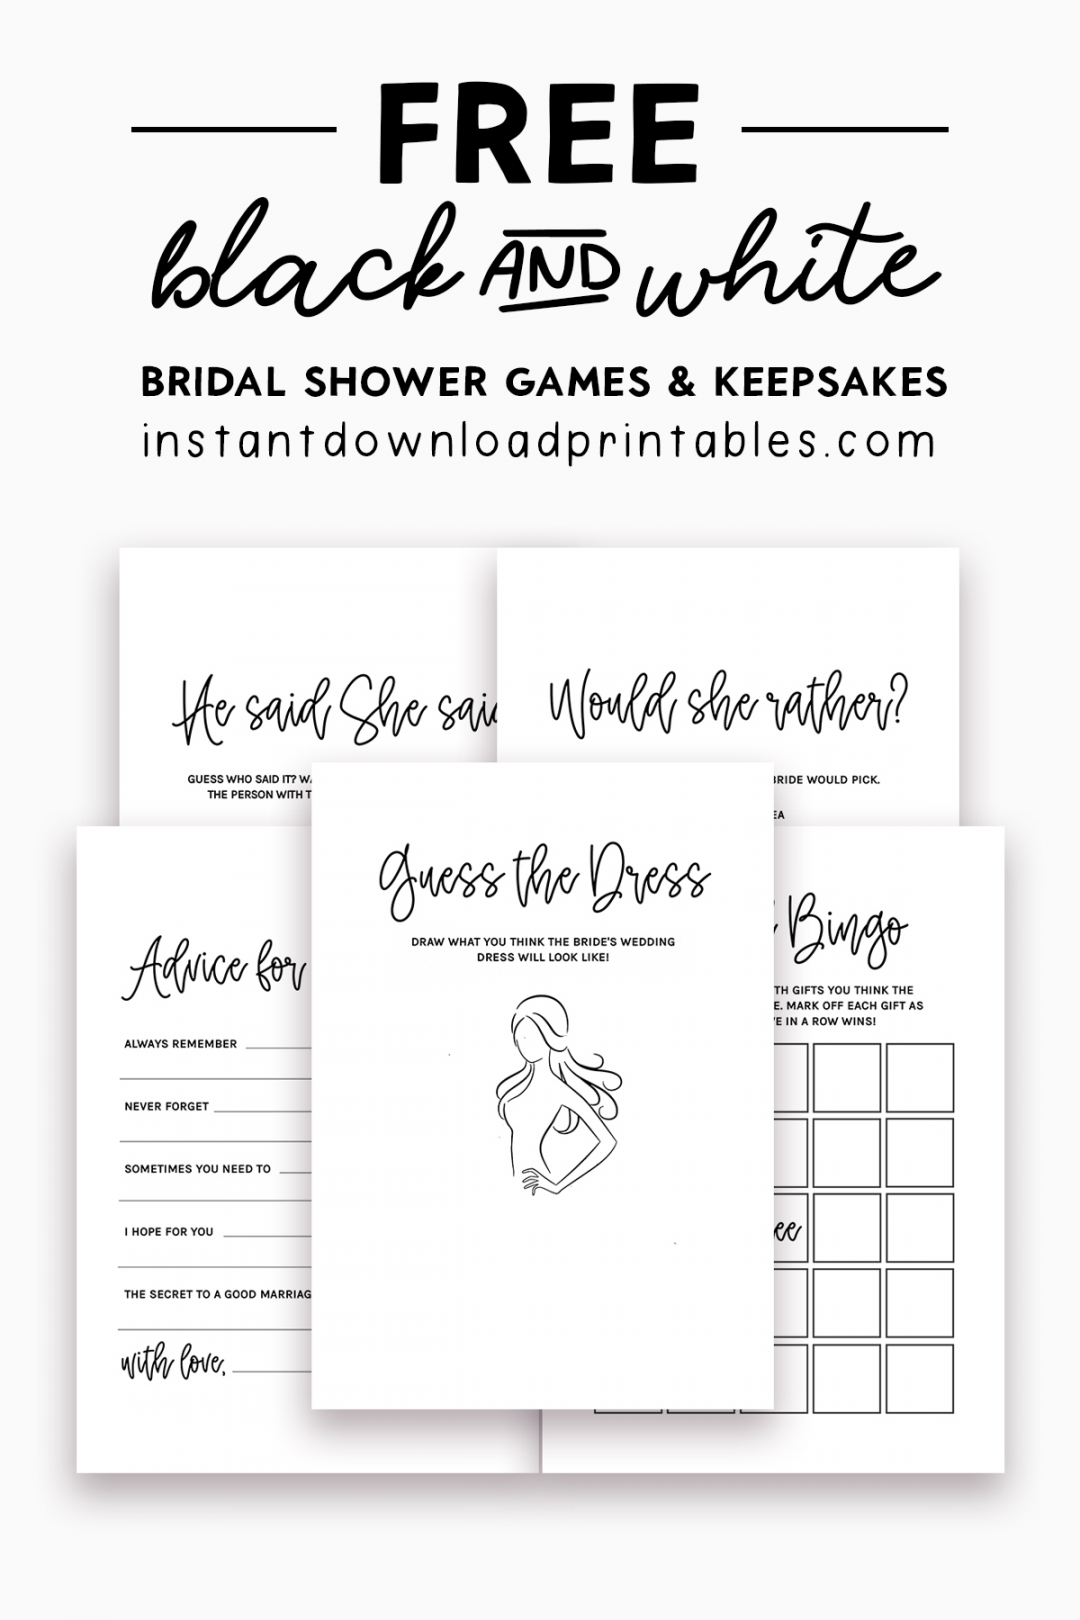 Free Bridal Shower Games Printable - Printable - Free Bridal Shower Games and Keepsakes Printables - Black and